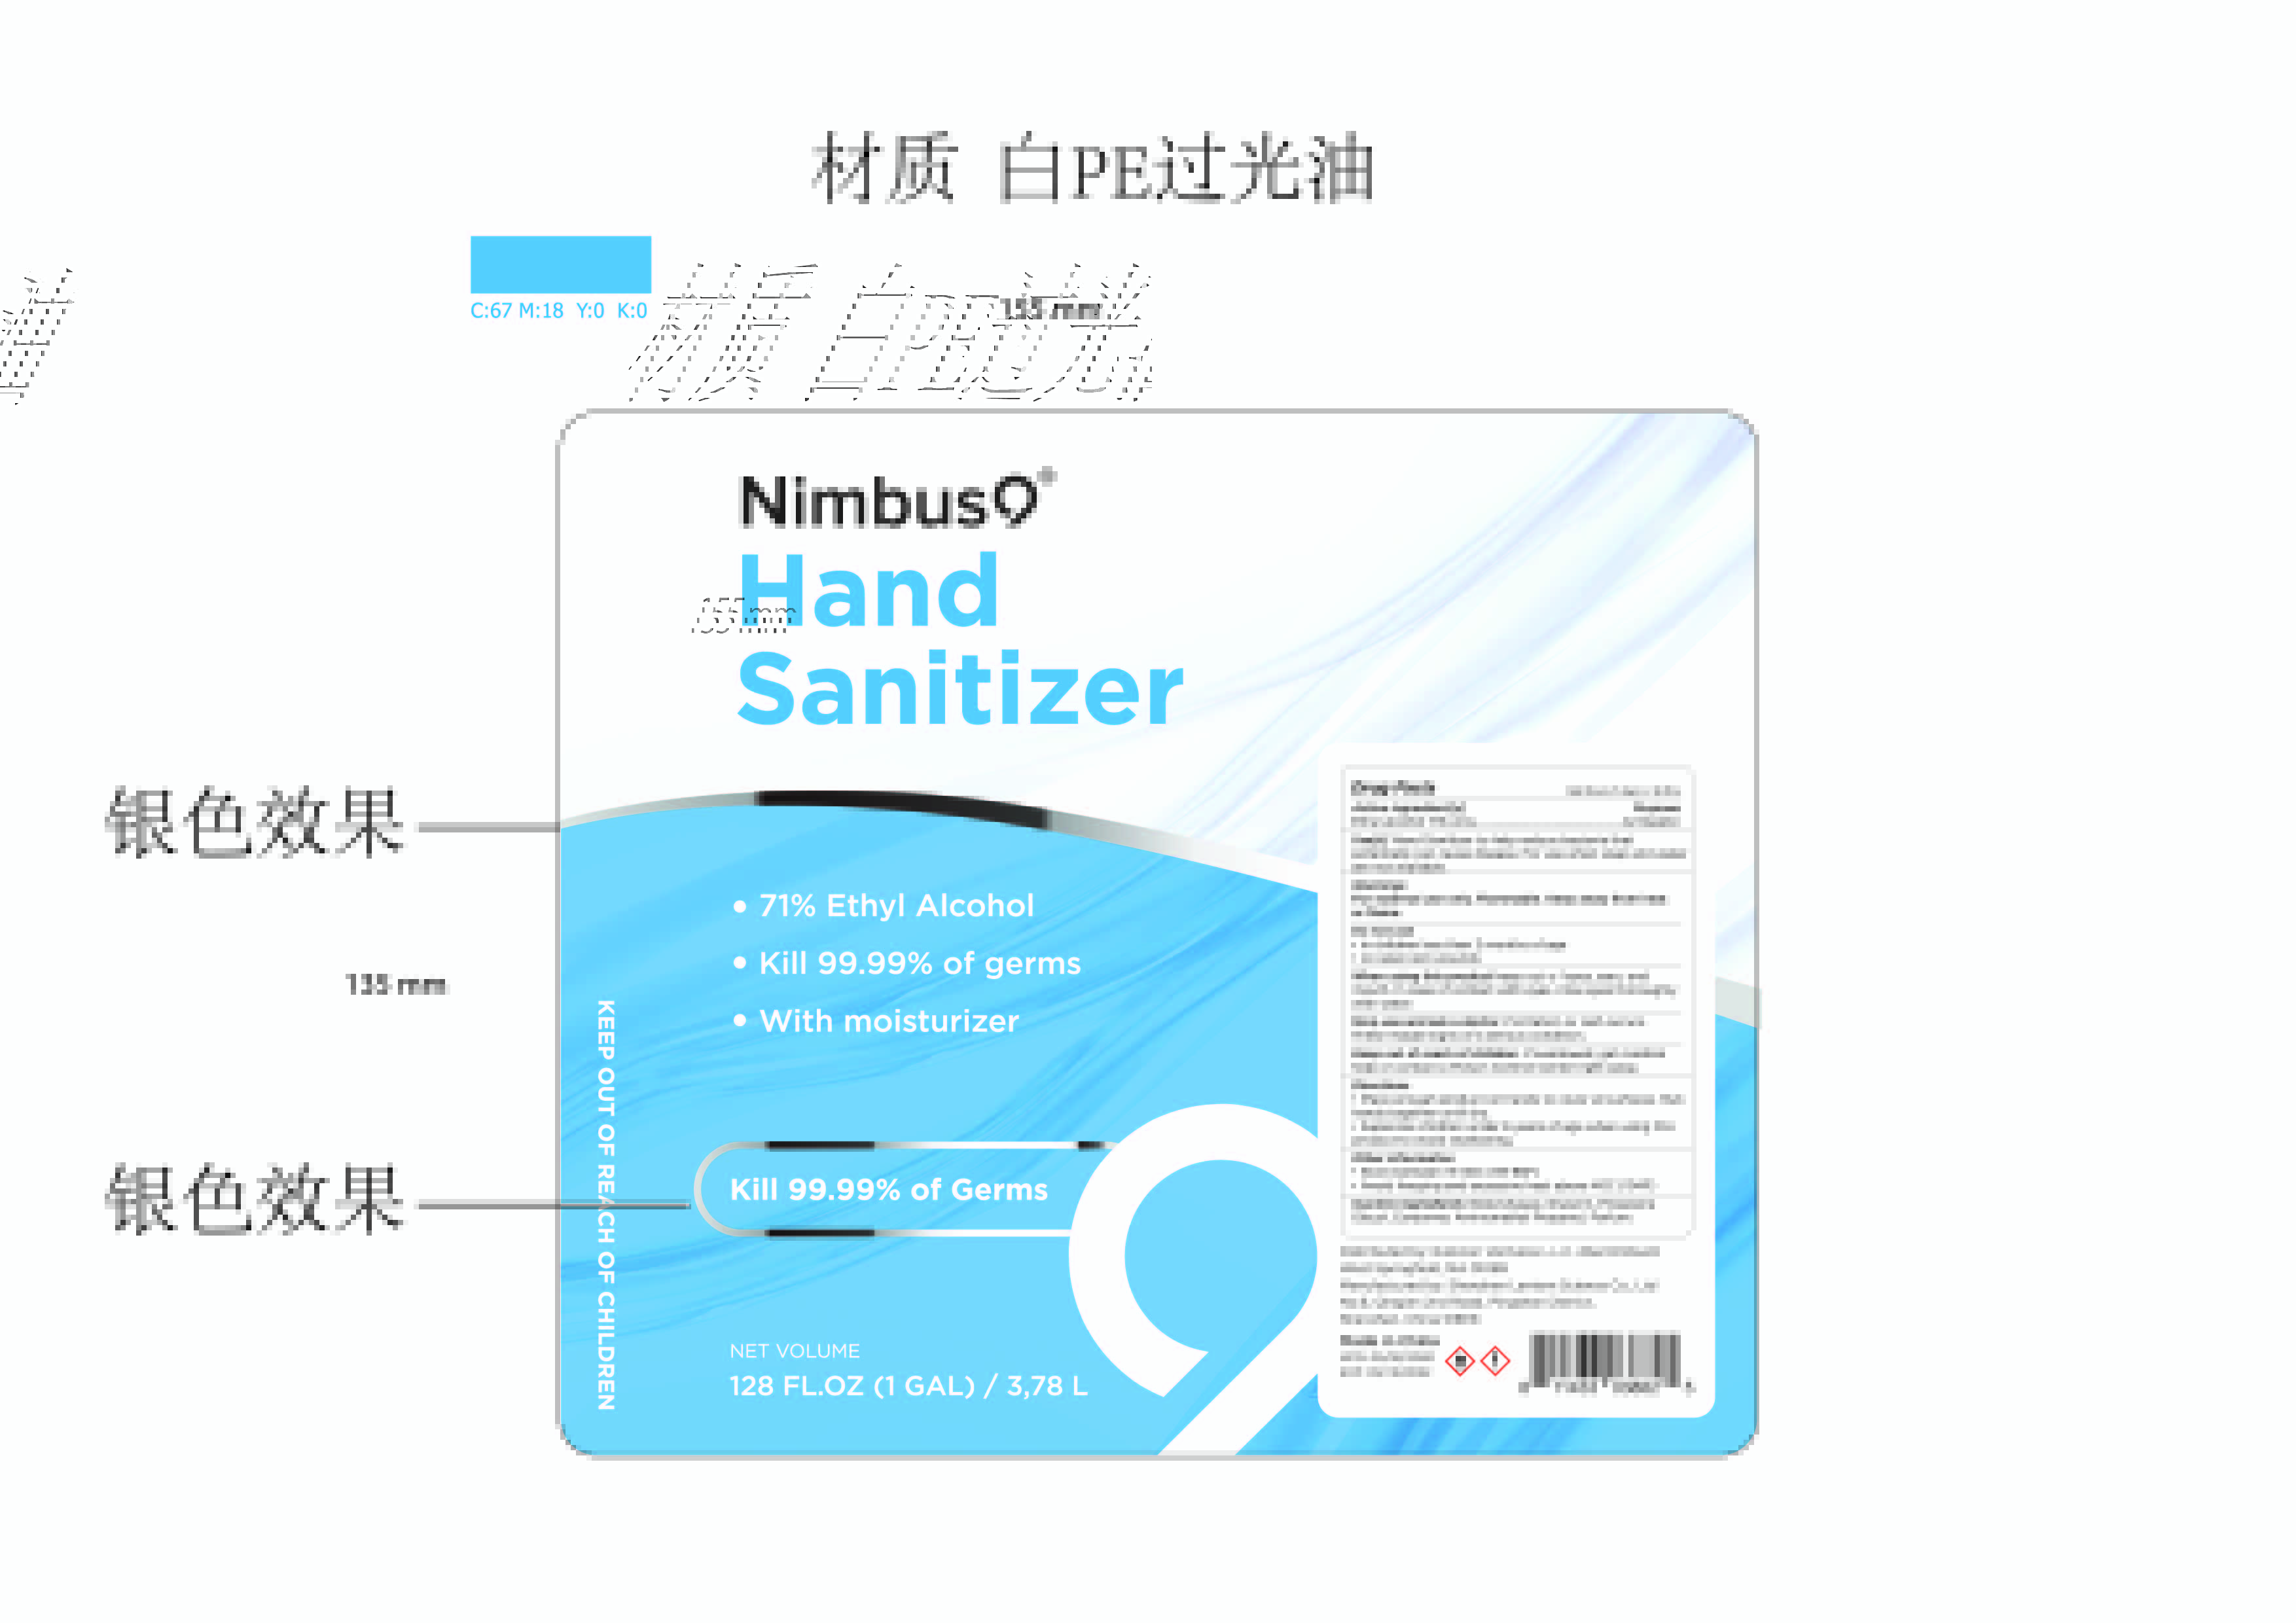 Nimbus 9 hand sanitizer 3.78L.jpg